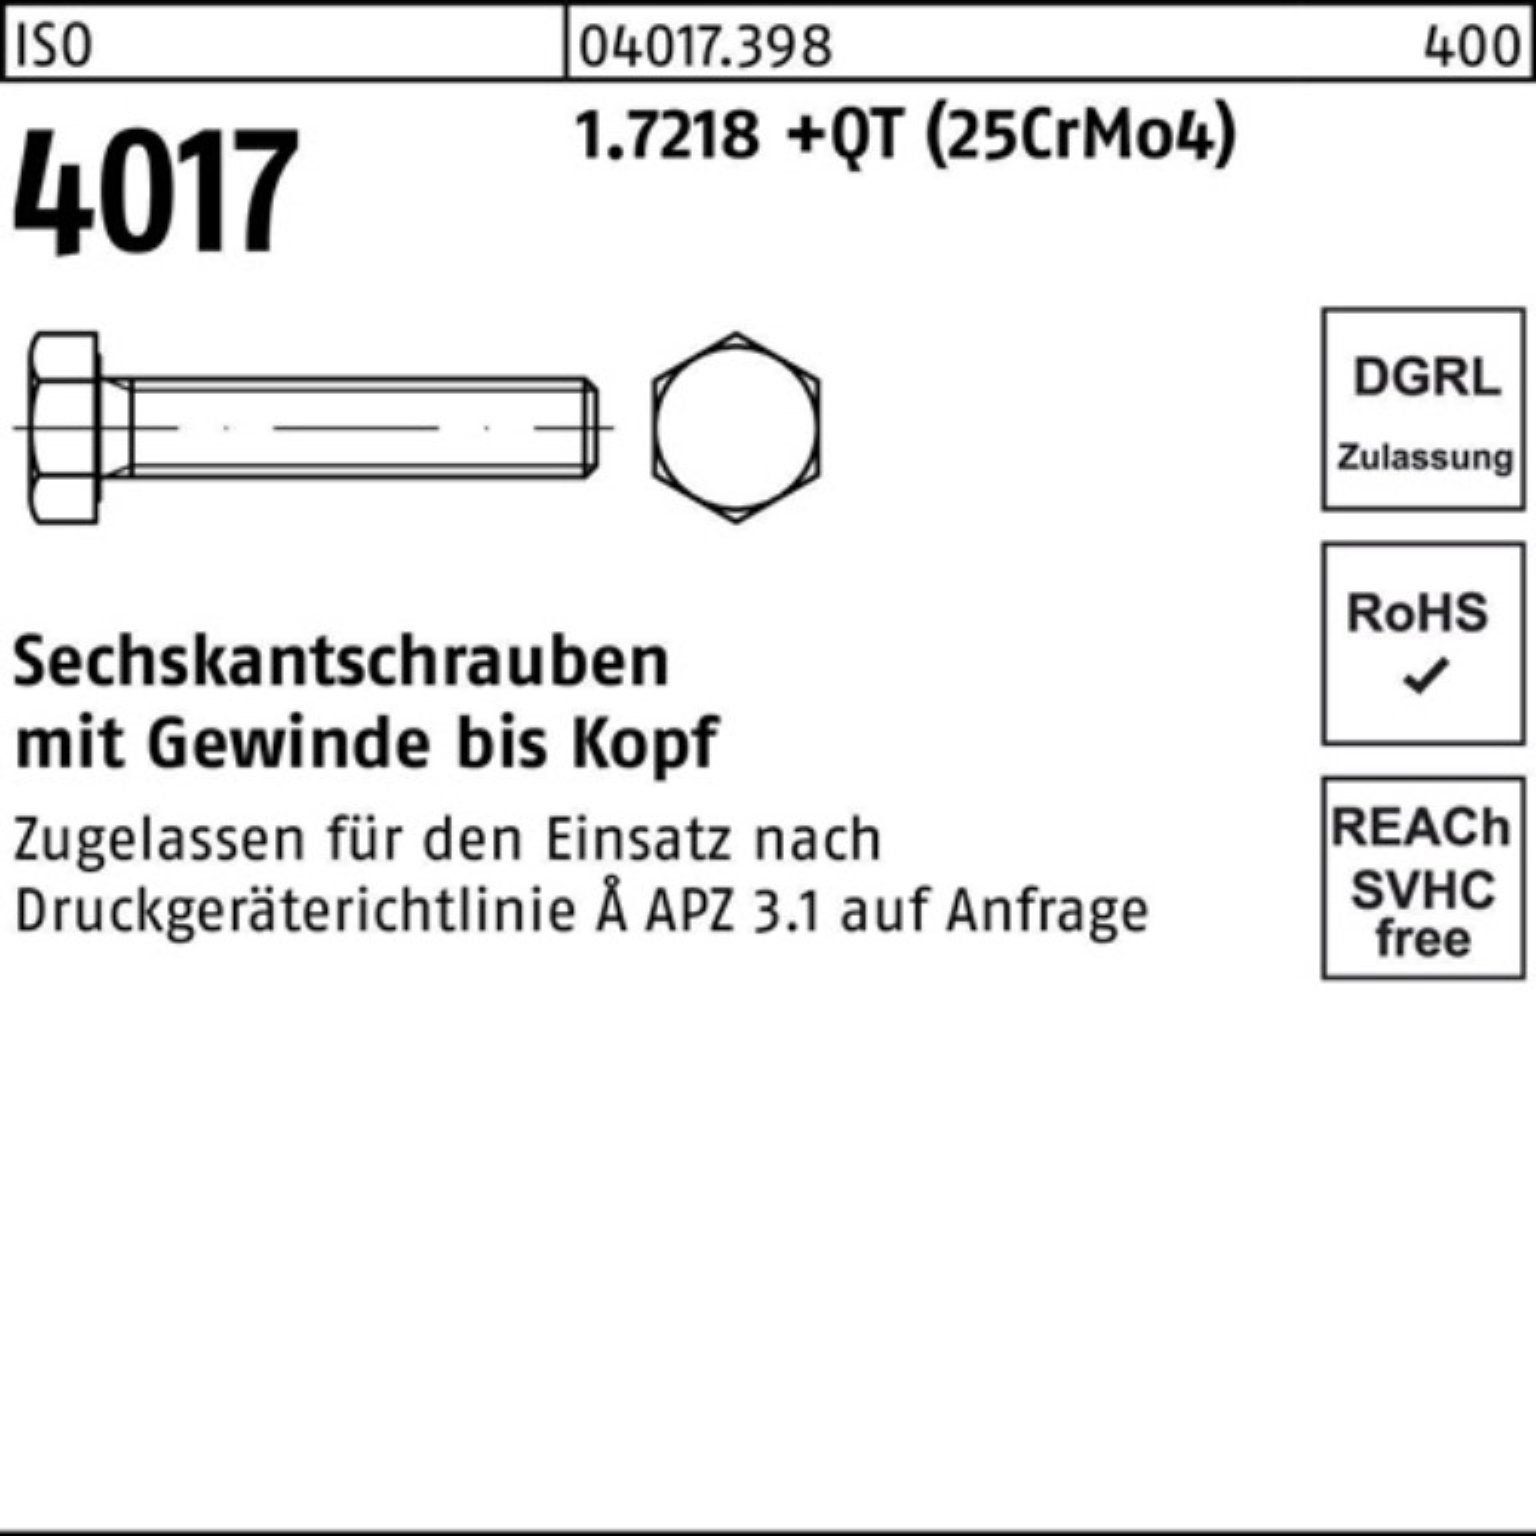 VG +QT 1.7218 M27x Sechskantschraube 60 ISO Bufab Sechskantschraube Pack 4017 100er (25CrMo4)